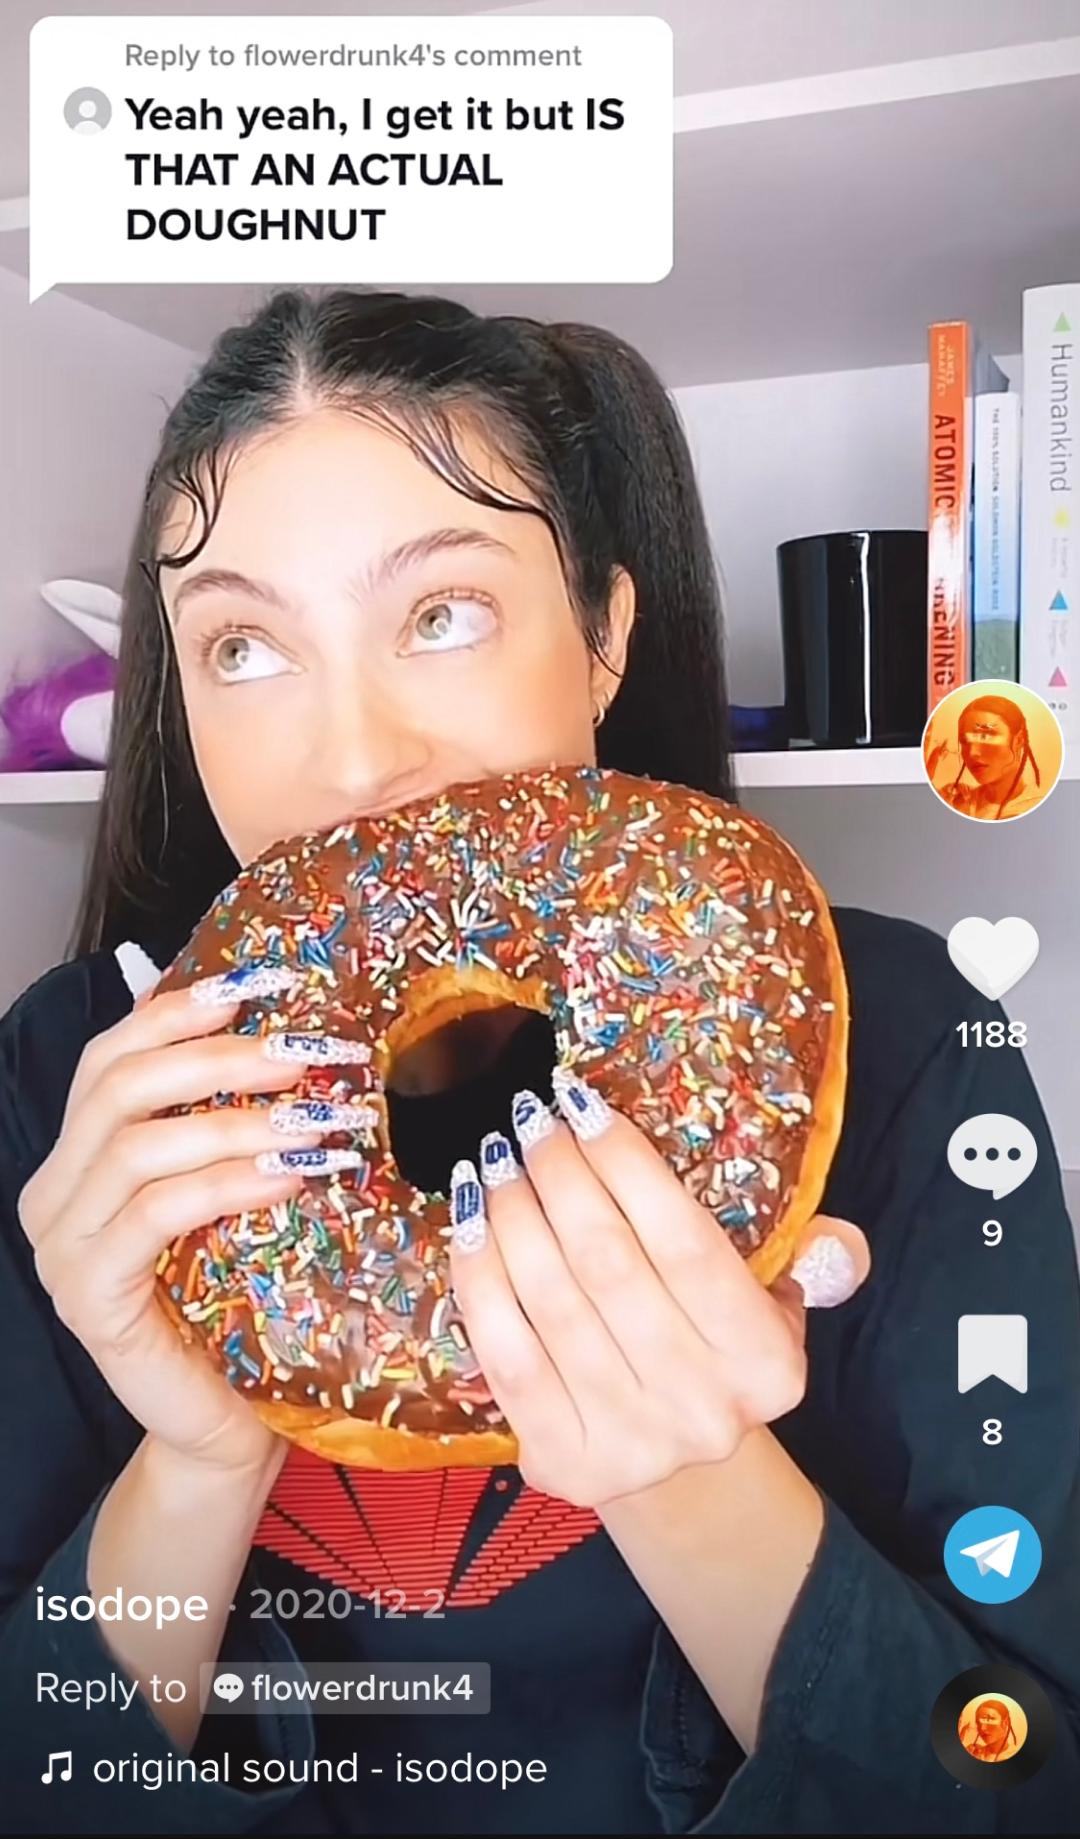 Woman eating a doughnut